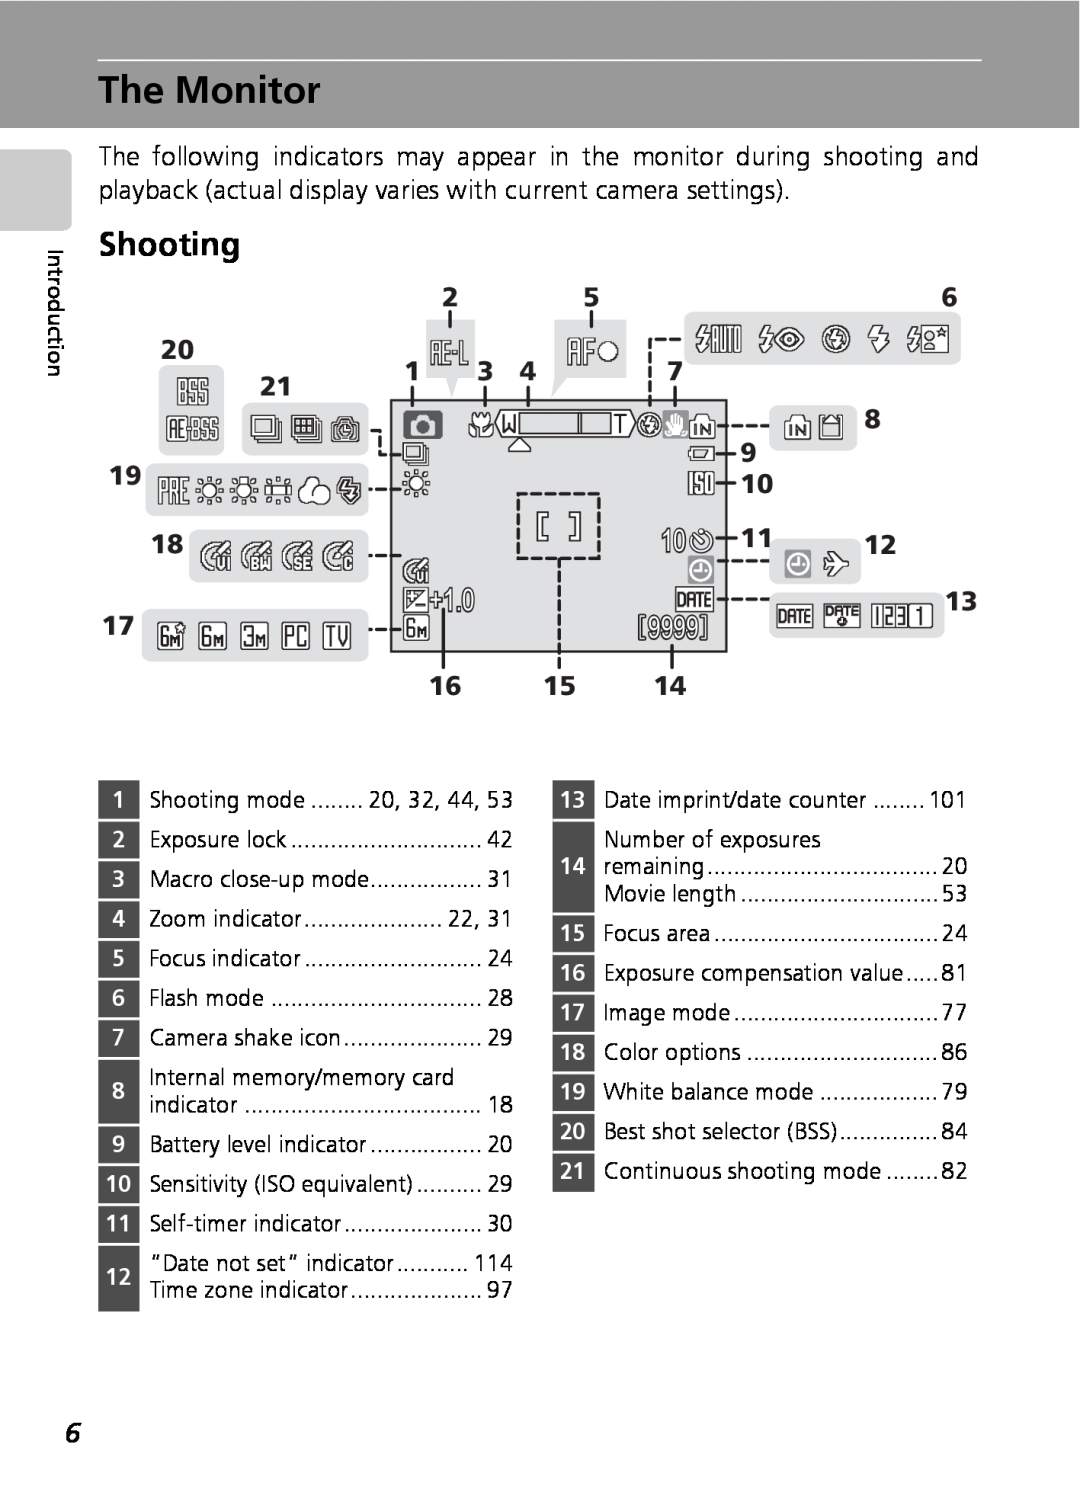 Nikon COOLPIXS9 manual The Monitor, Shooting, 17bcehi, z A B C D, 19fghijl, +1.0, 9999, 1 G 3, M FBhM, 9 10, 11 W Y 